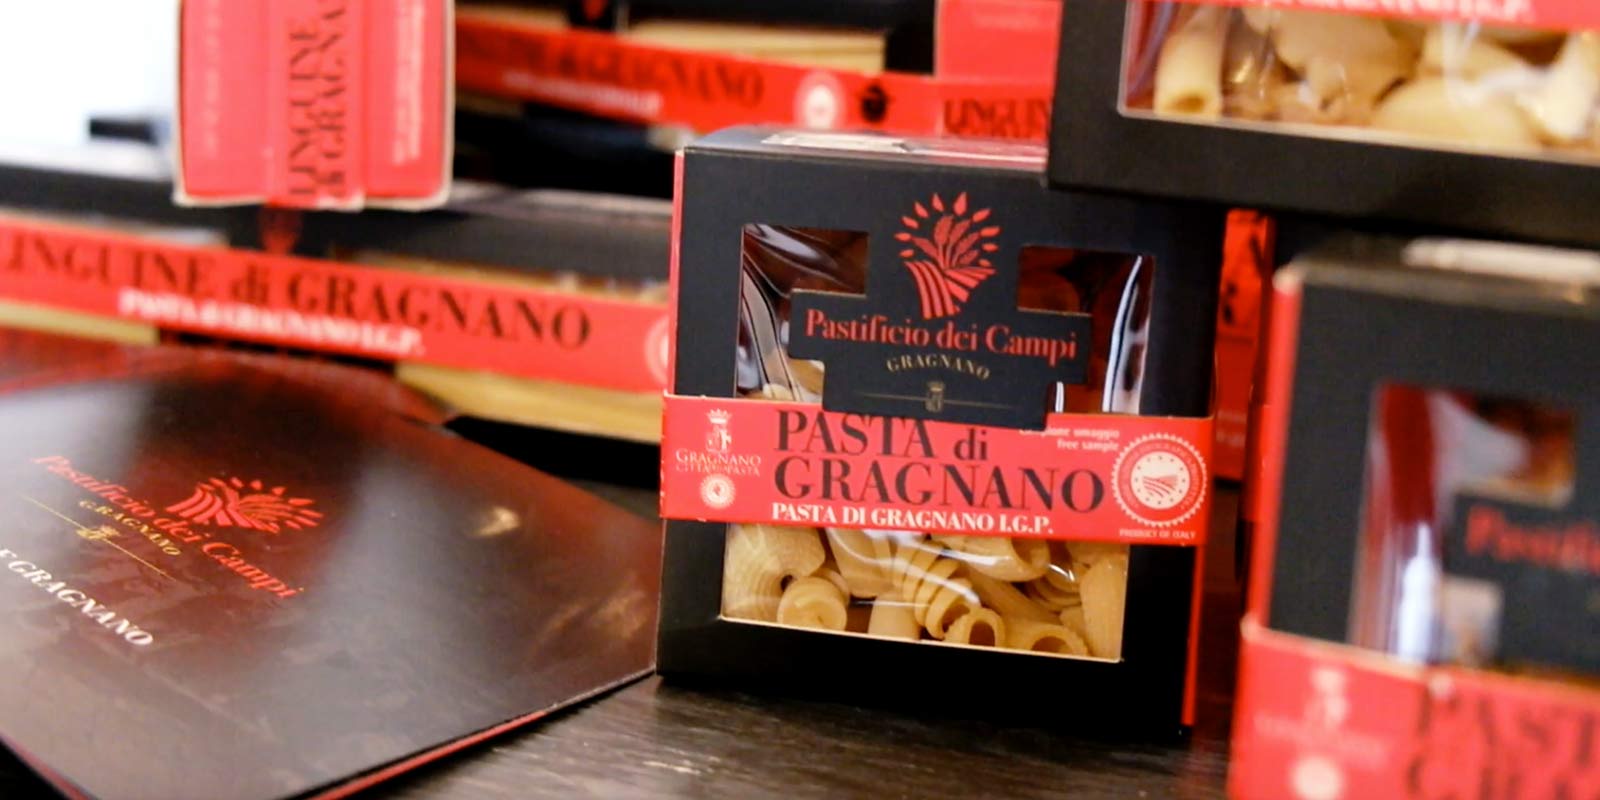 Pastifico dei Campi - Pasta di Gragnano IGP Pastificio dei Campi menghasilkan beberapa karya klasik Itali dan beberapa ciptaan asli. Pasta dibuat daripada 100% semolina gandum durum Itali dan disemperit menggunakan acuan gangsa.